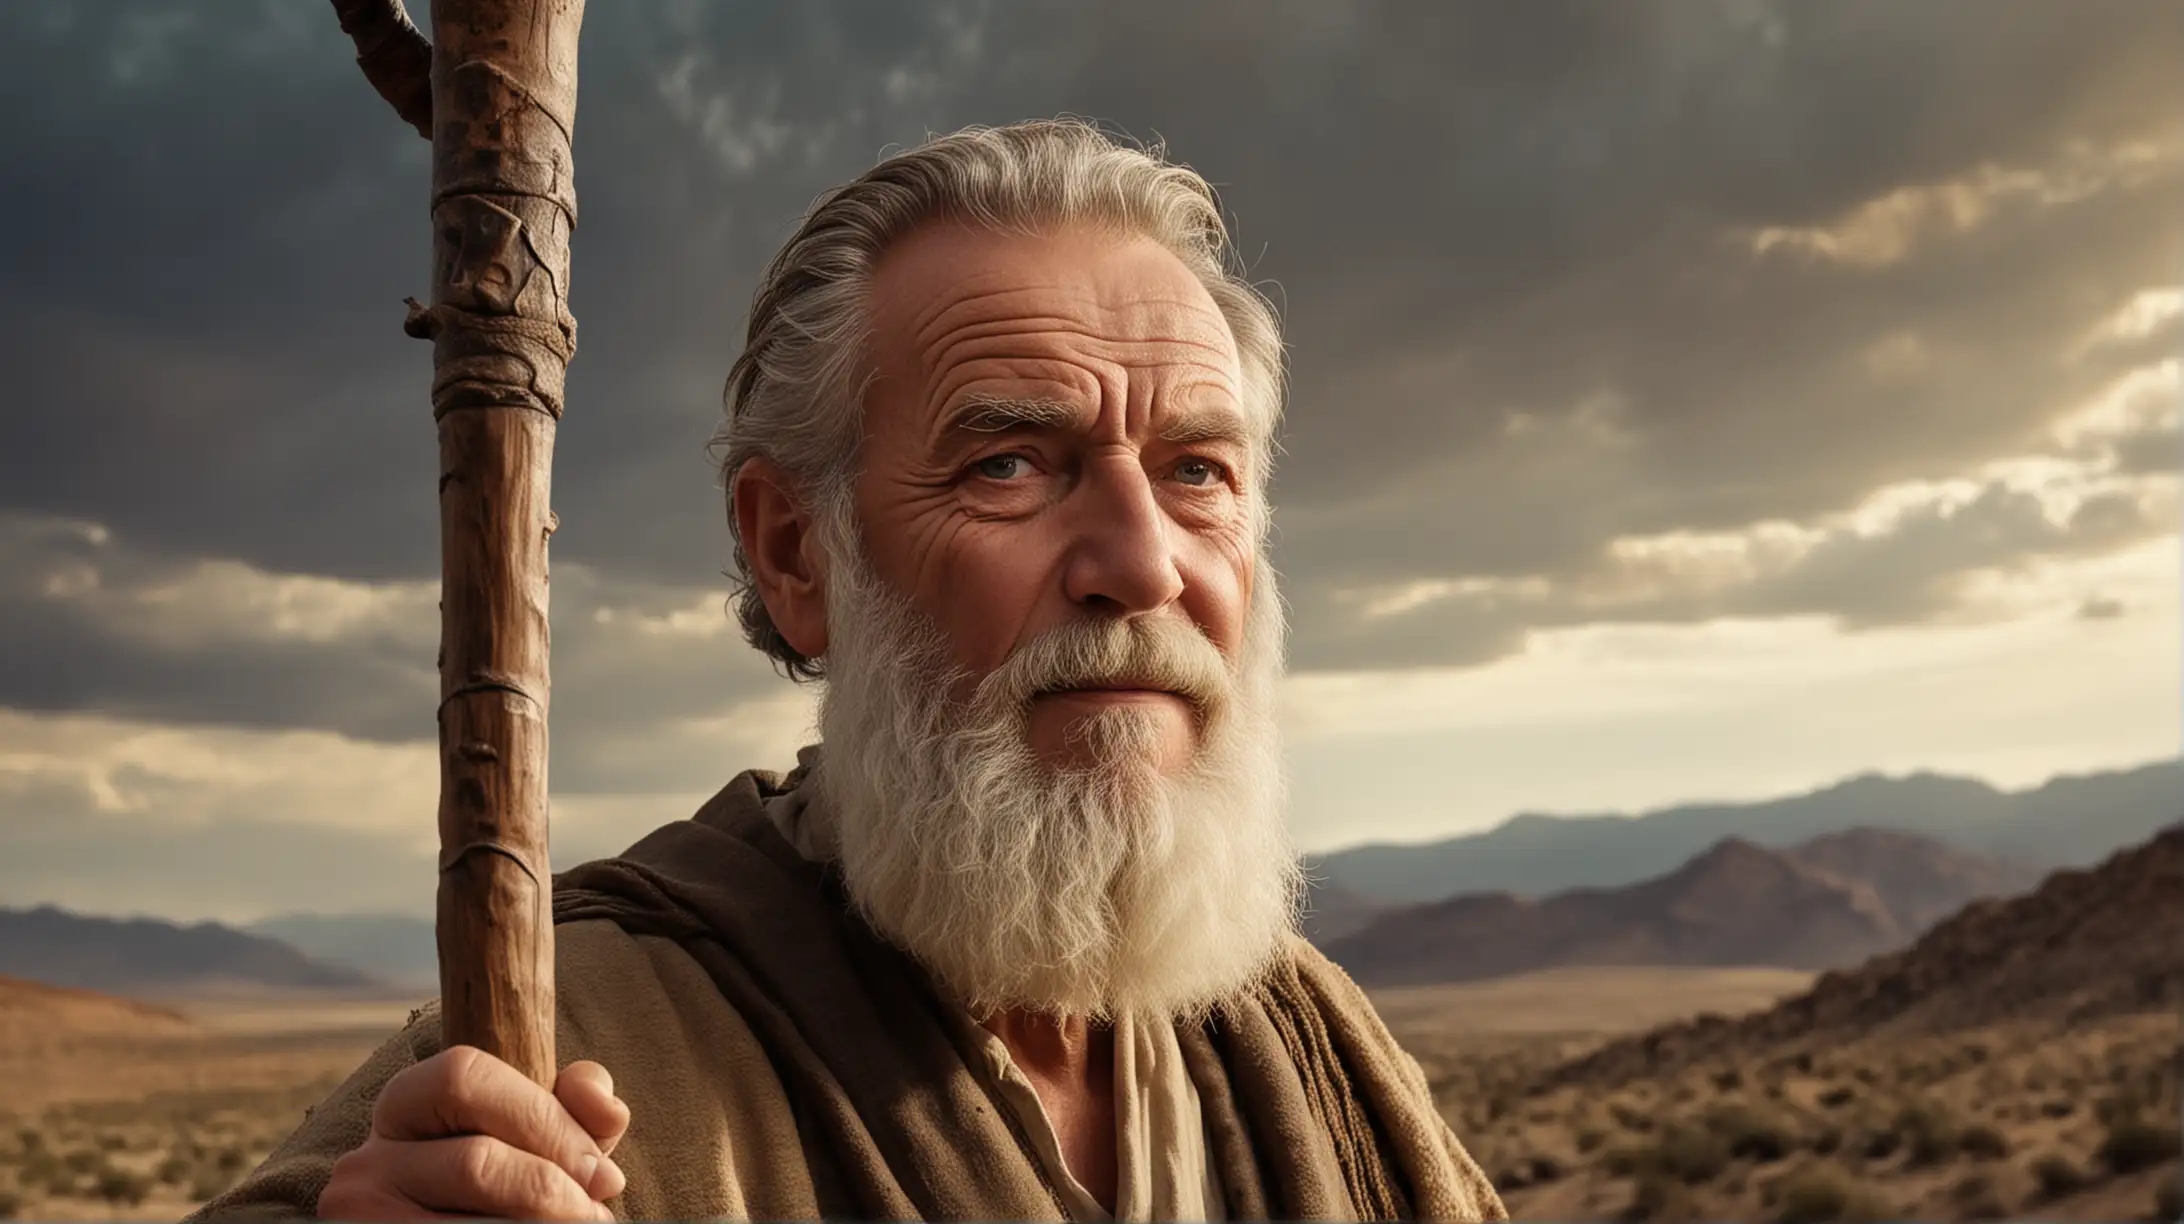 Elderly Man with Beard and Walking Stick in Biblical Desert Setting